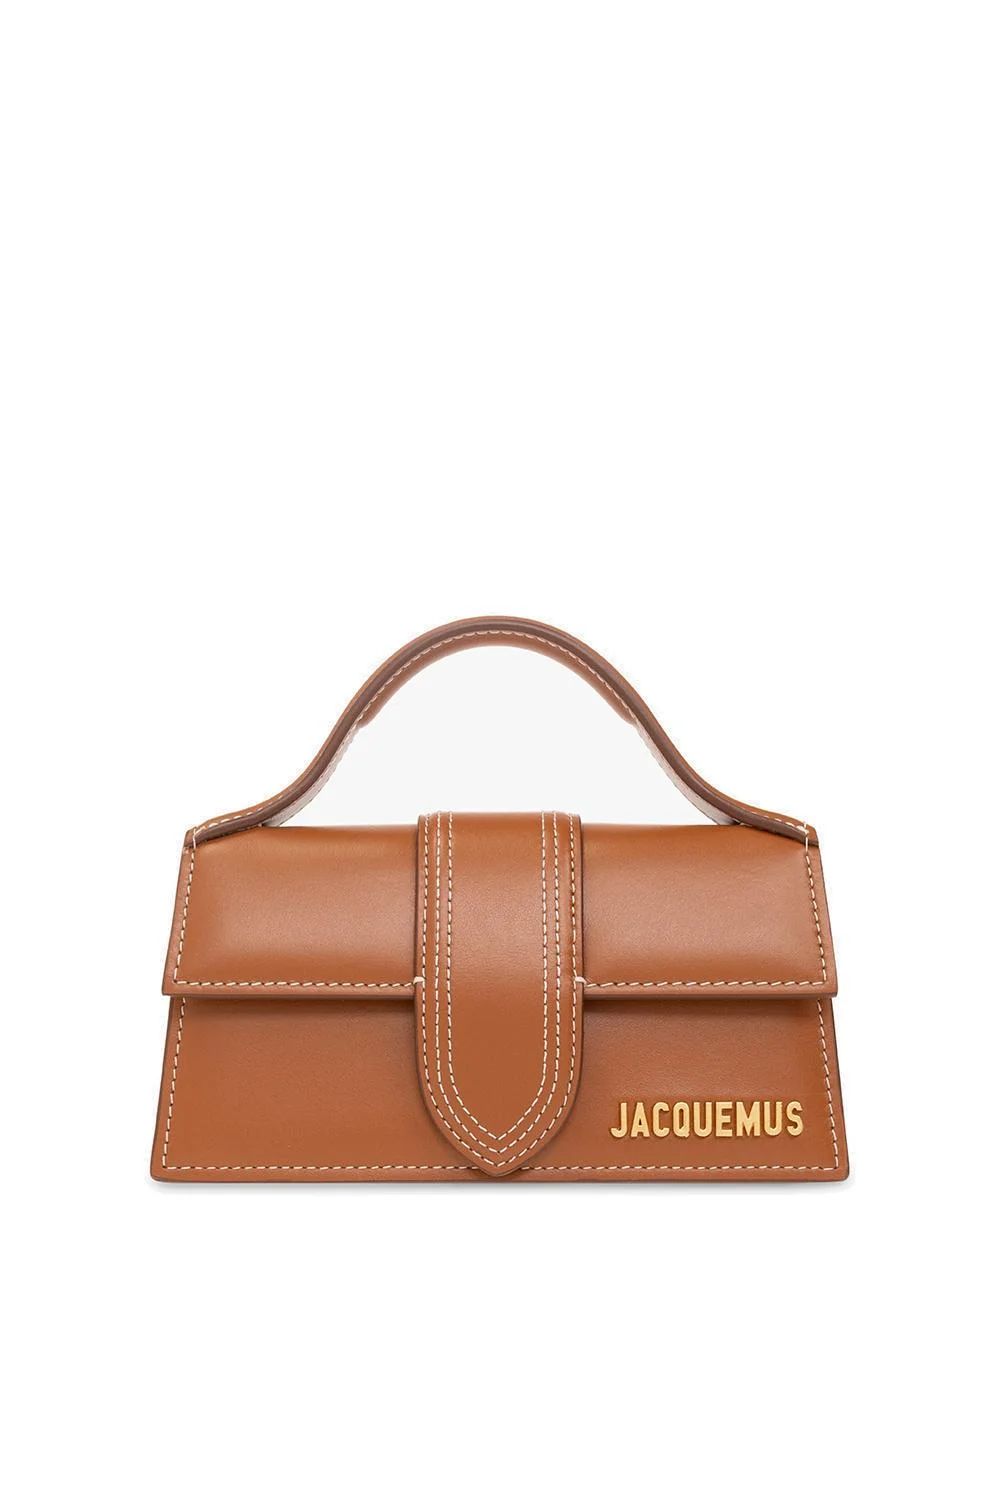 Jacquemus Le Bambino Small Top Handle Tote Bag | Cettire Global